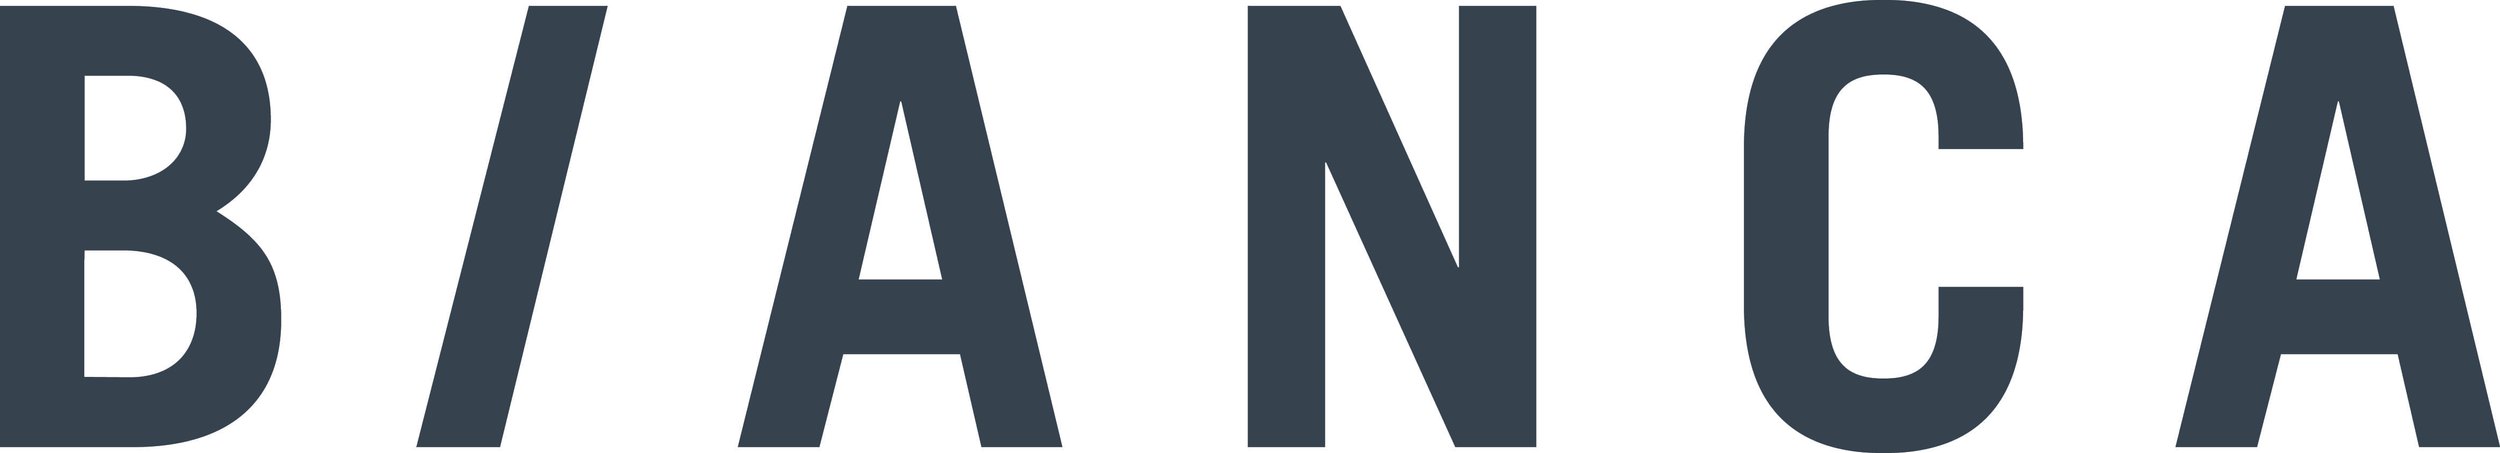 BIANCA_Logo_Anthrazit.jpg